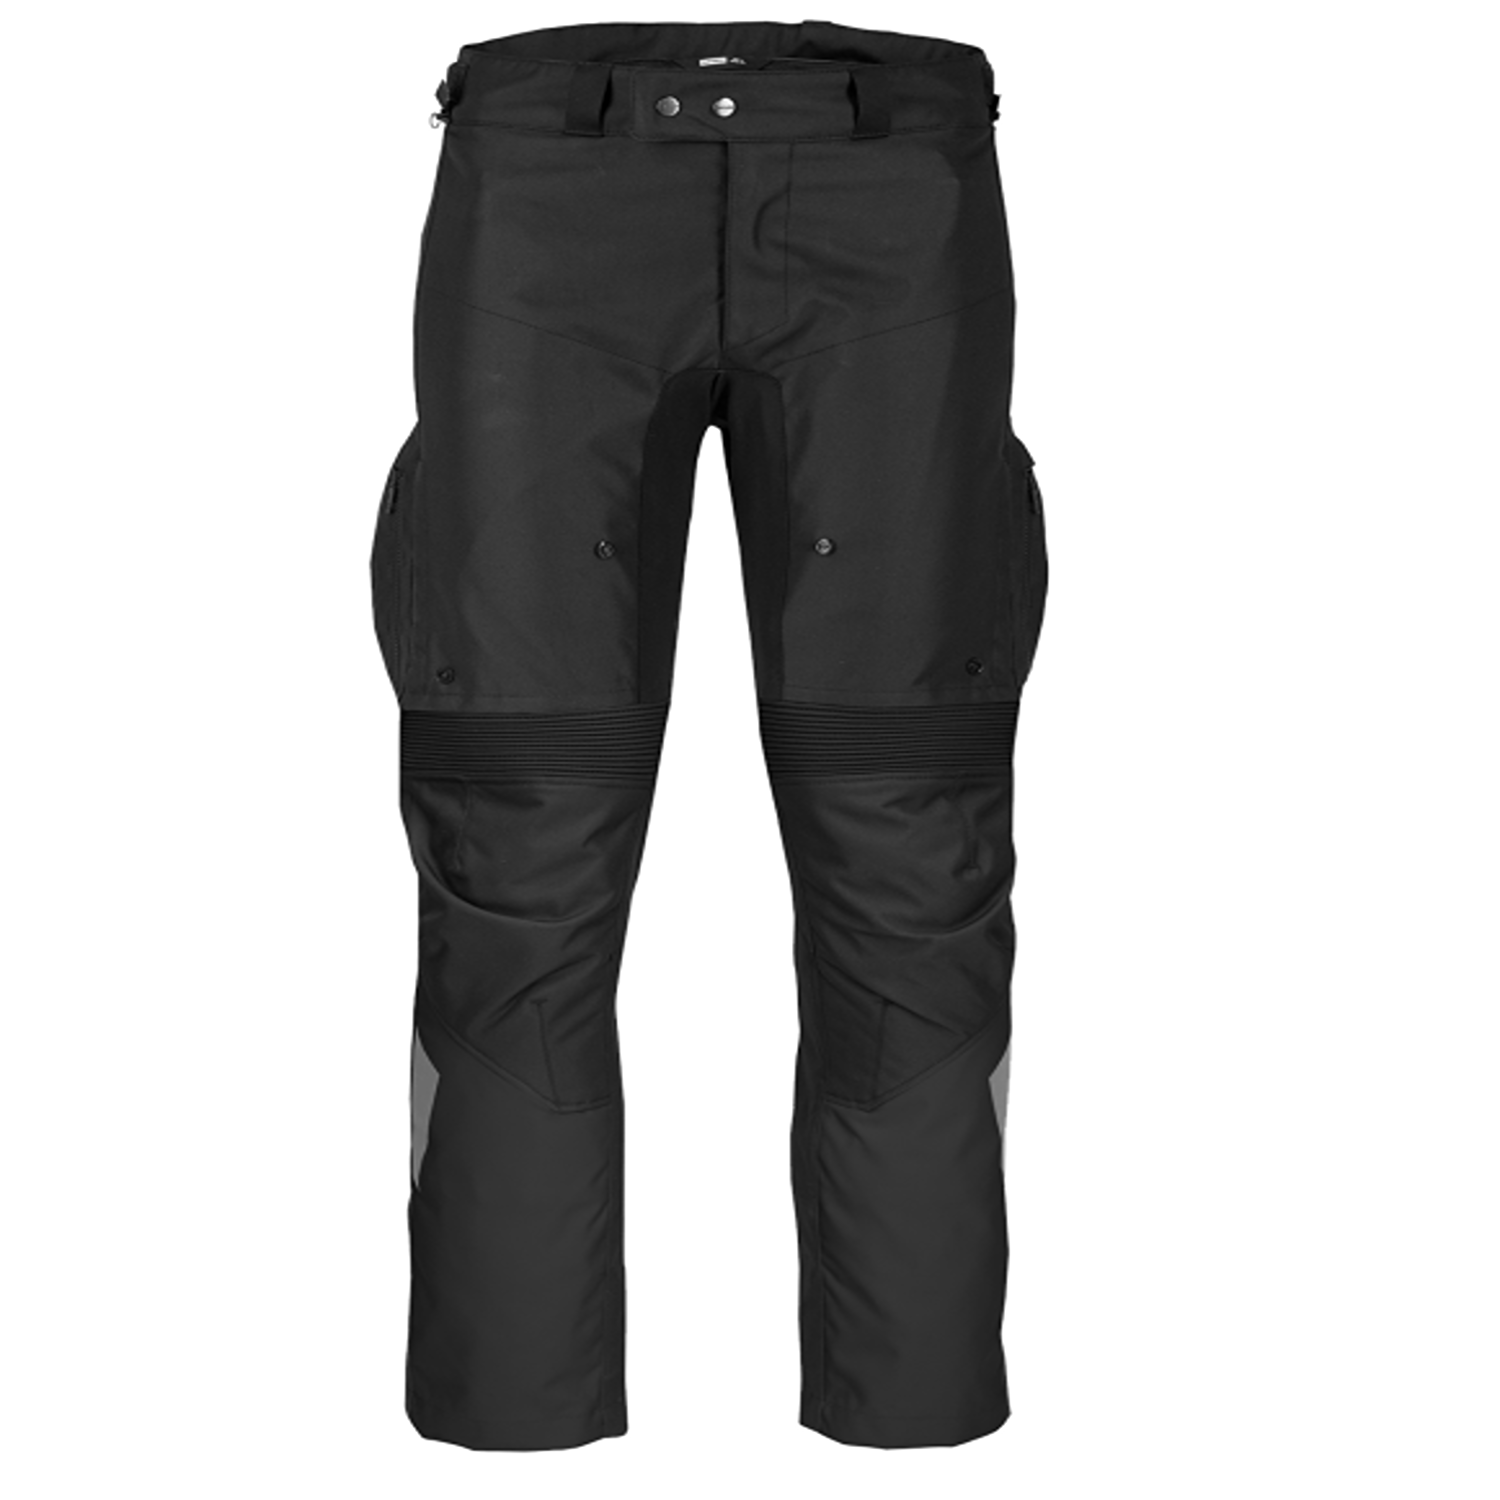 Image of EU Spidi Crossmaster Short Pants Black Taille 4XL